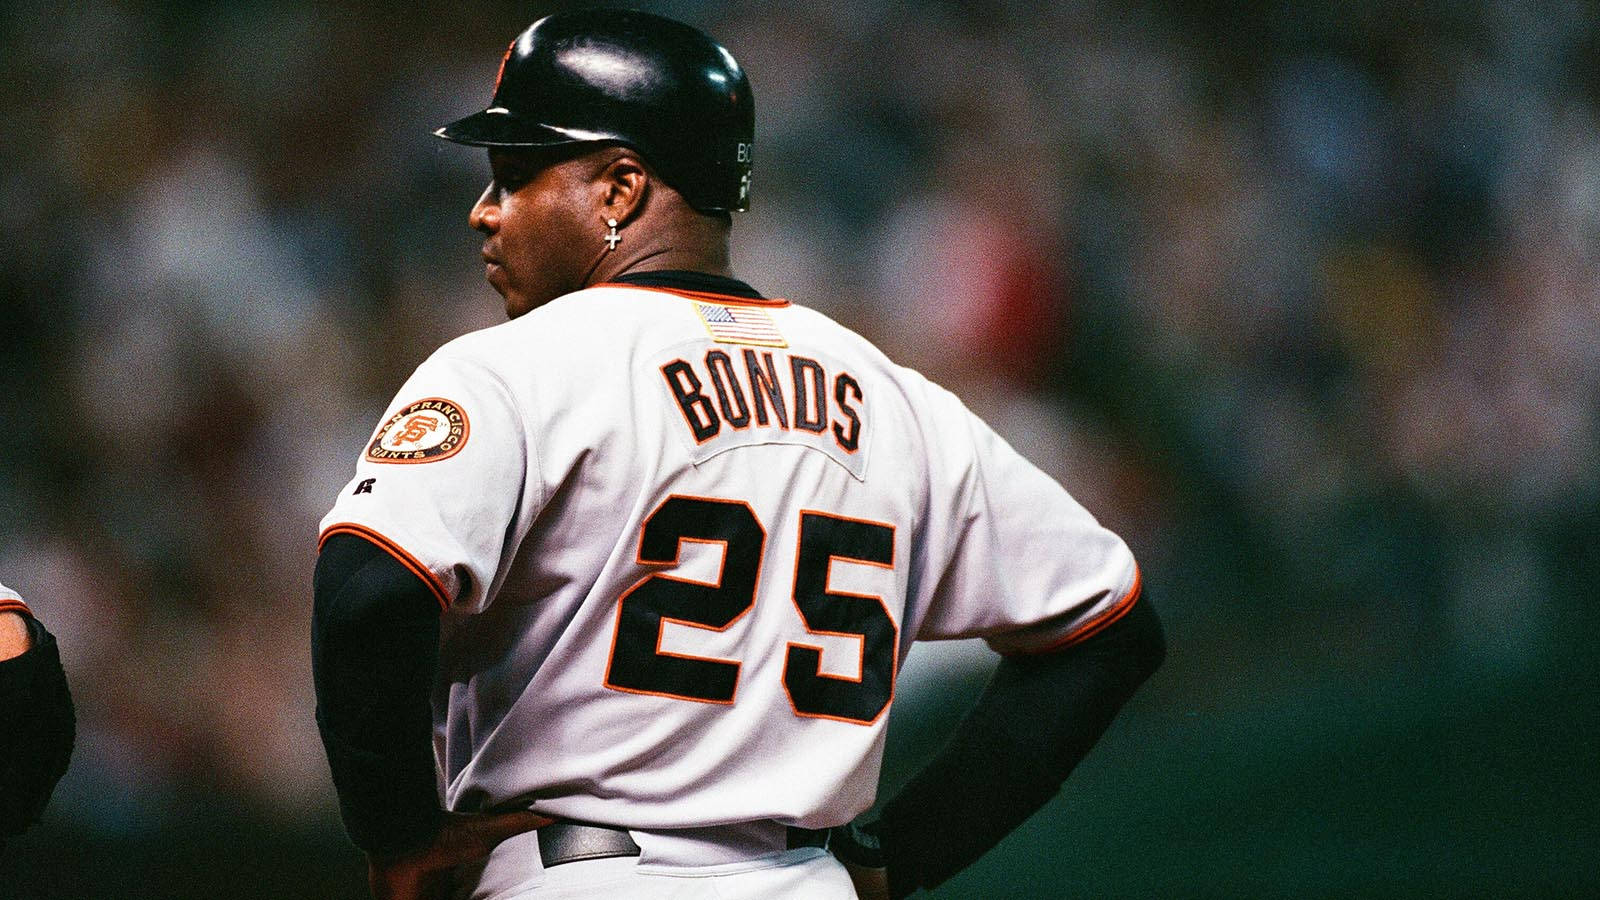 Barry Bonds Baseball Uniform Background